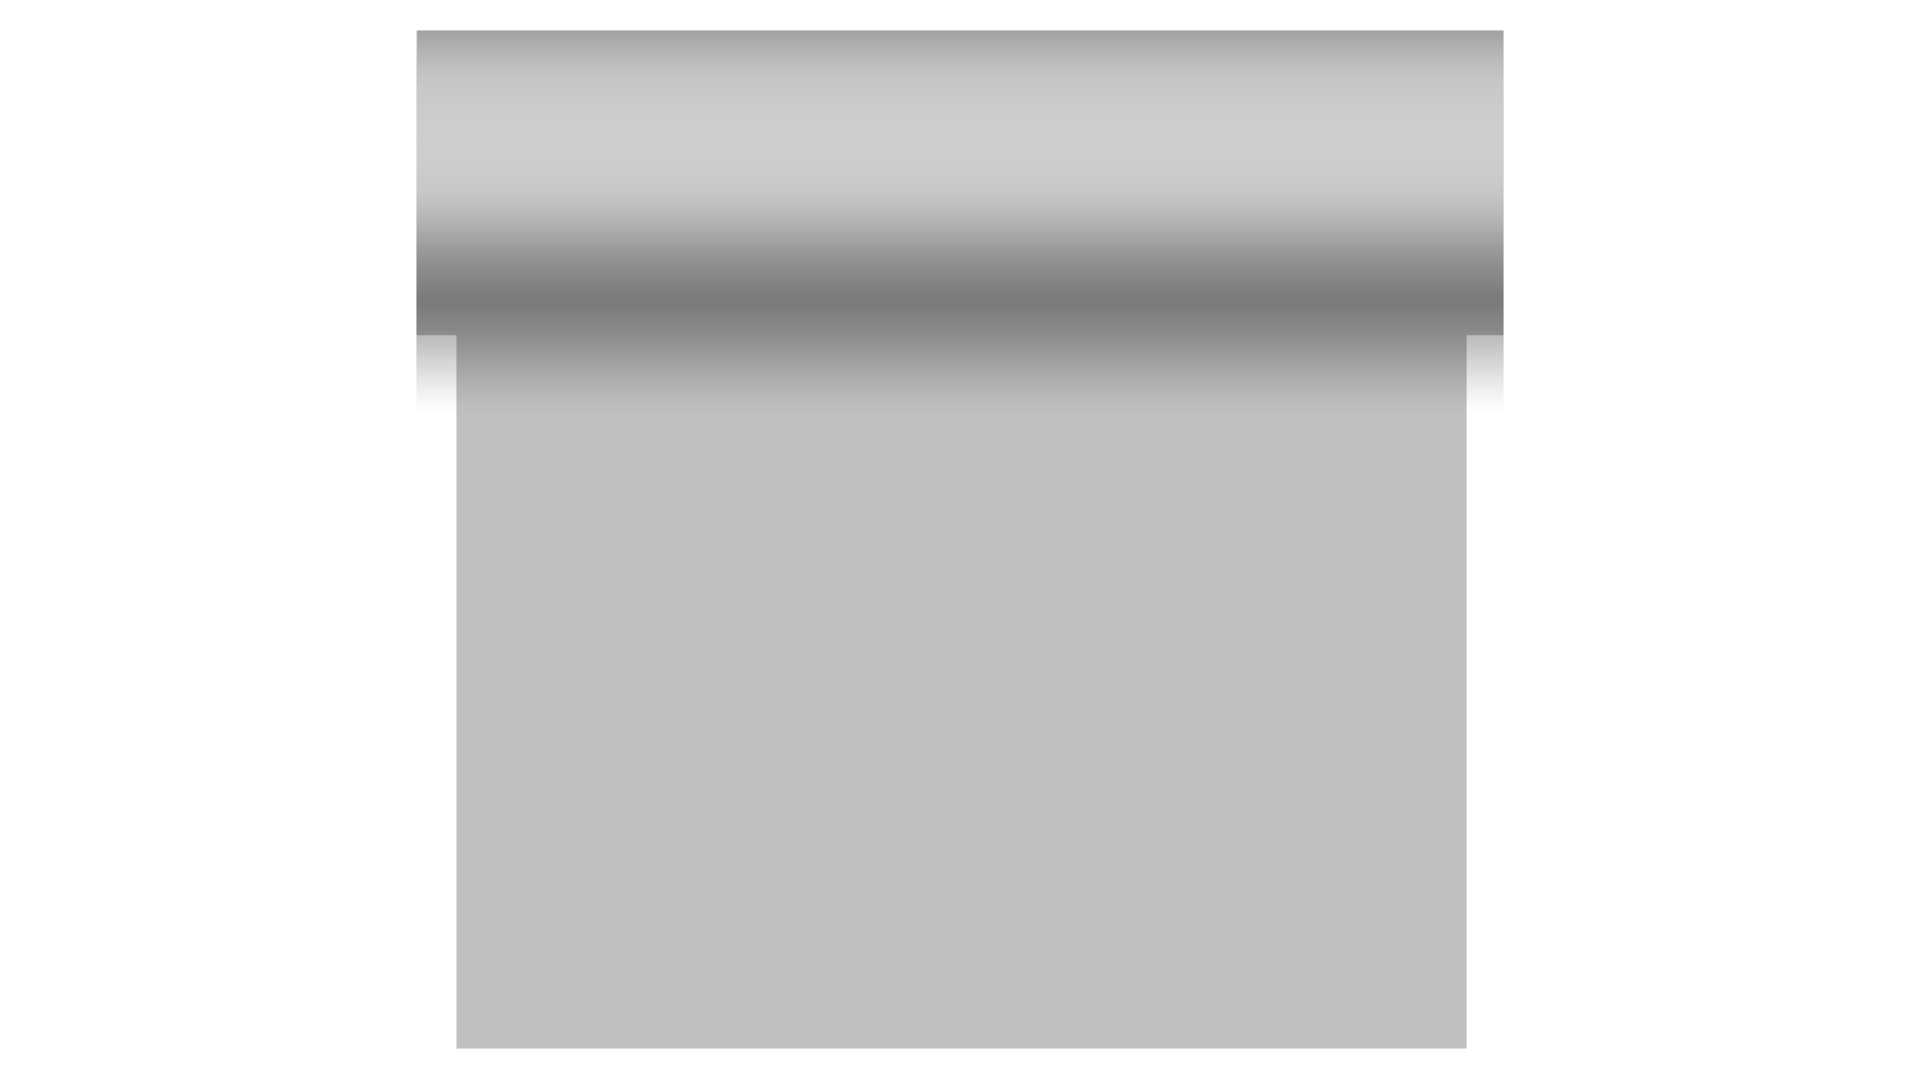 Скатерть рулонная Duni Tete-a-Tete 0.4х4,8 м, целлюлоза, серебристый